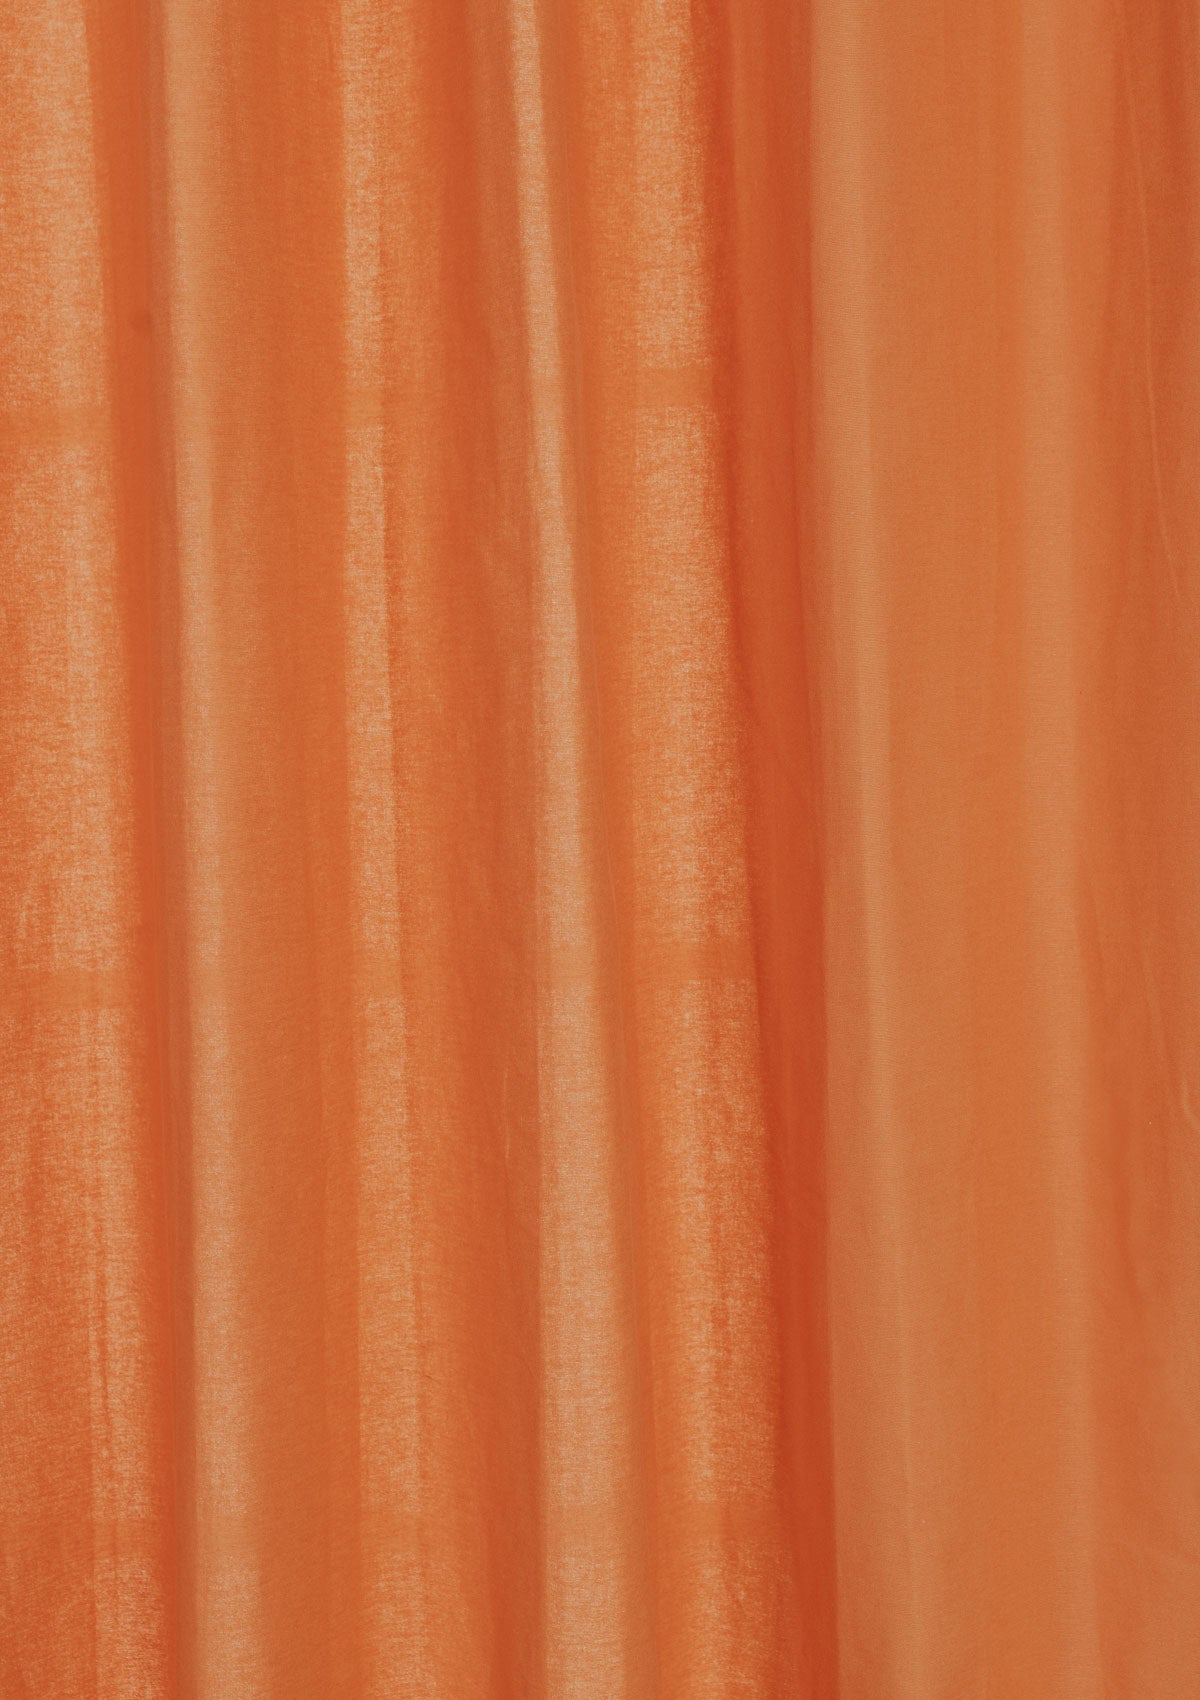 Solid orange 100% cotton plain curtain for bedroom - Room darkening - Single